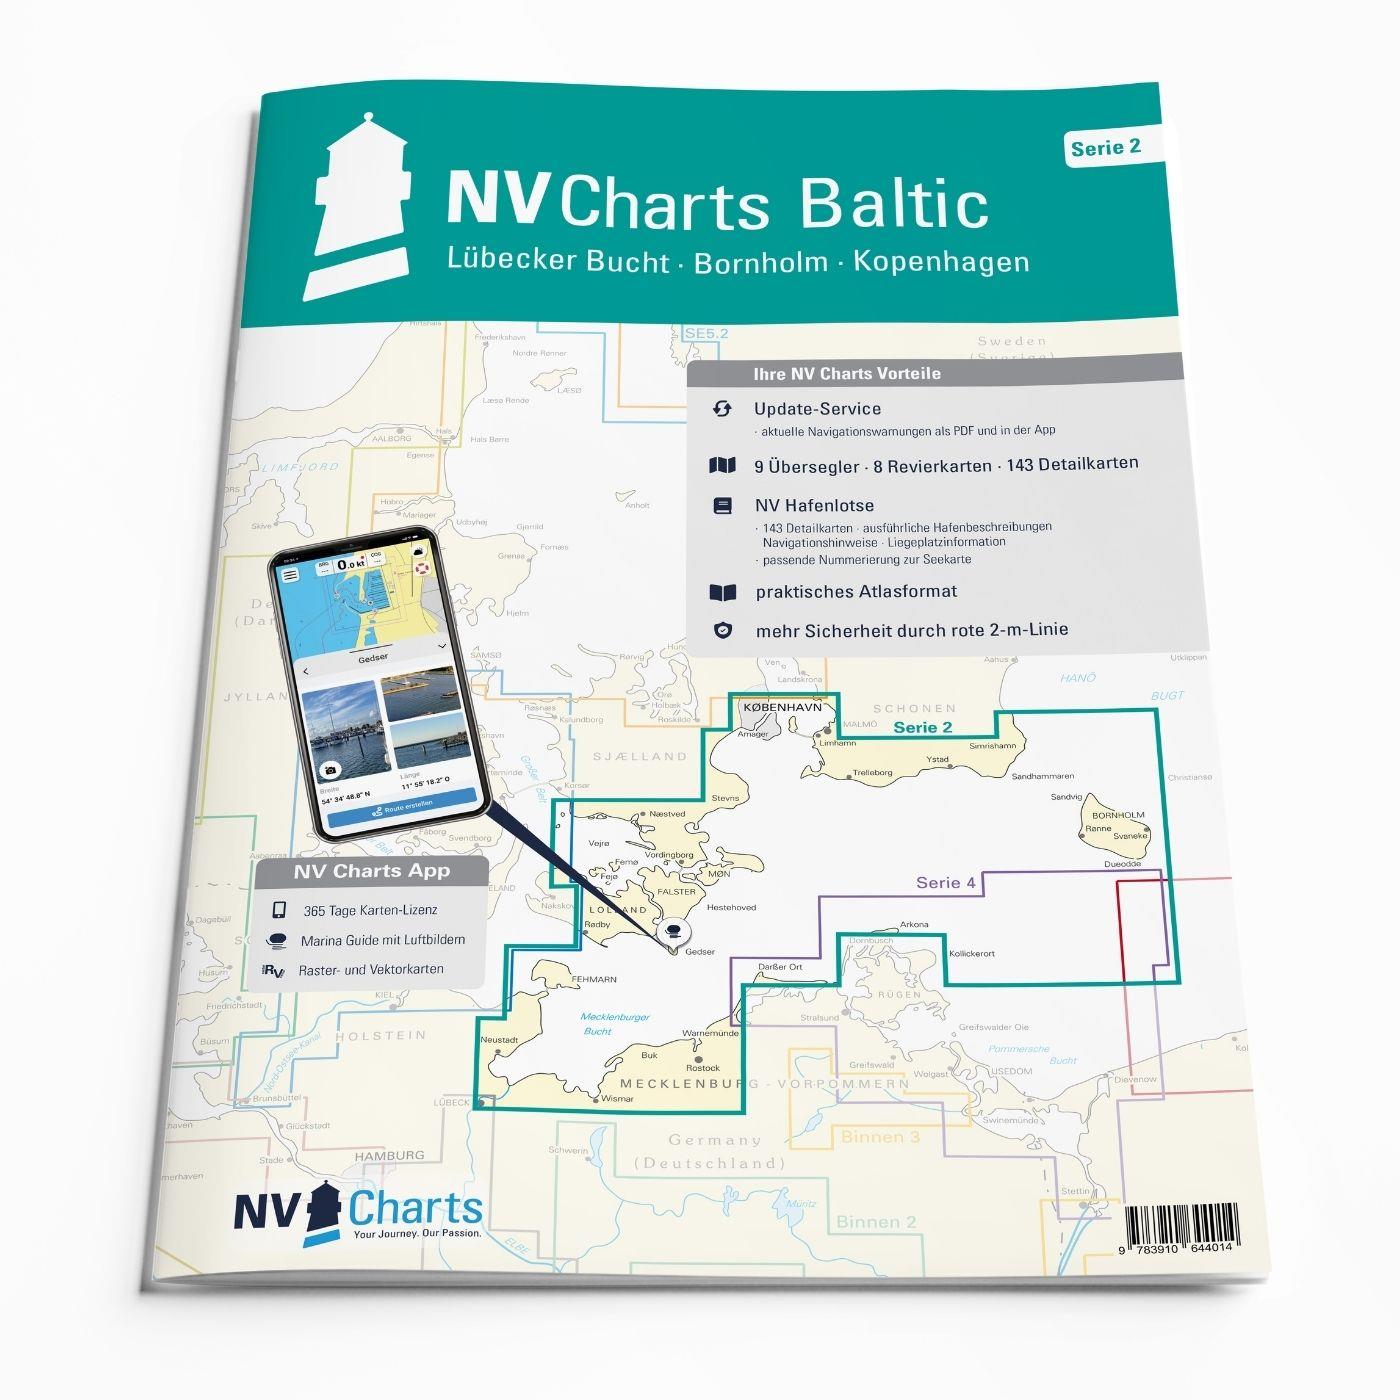 NV Charts Baltic Region 2 Lübeck - Bornholm - Copenhagen